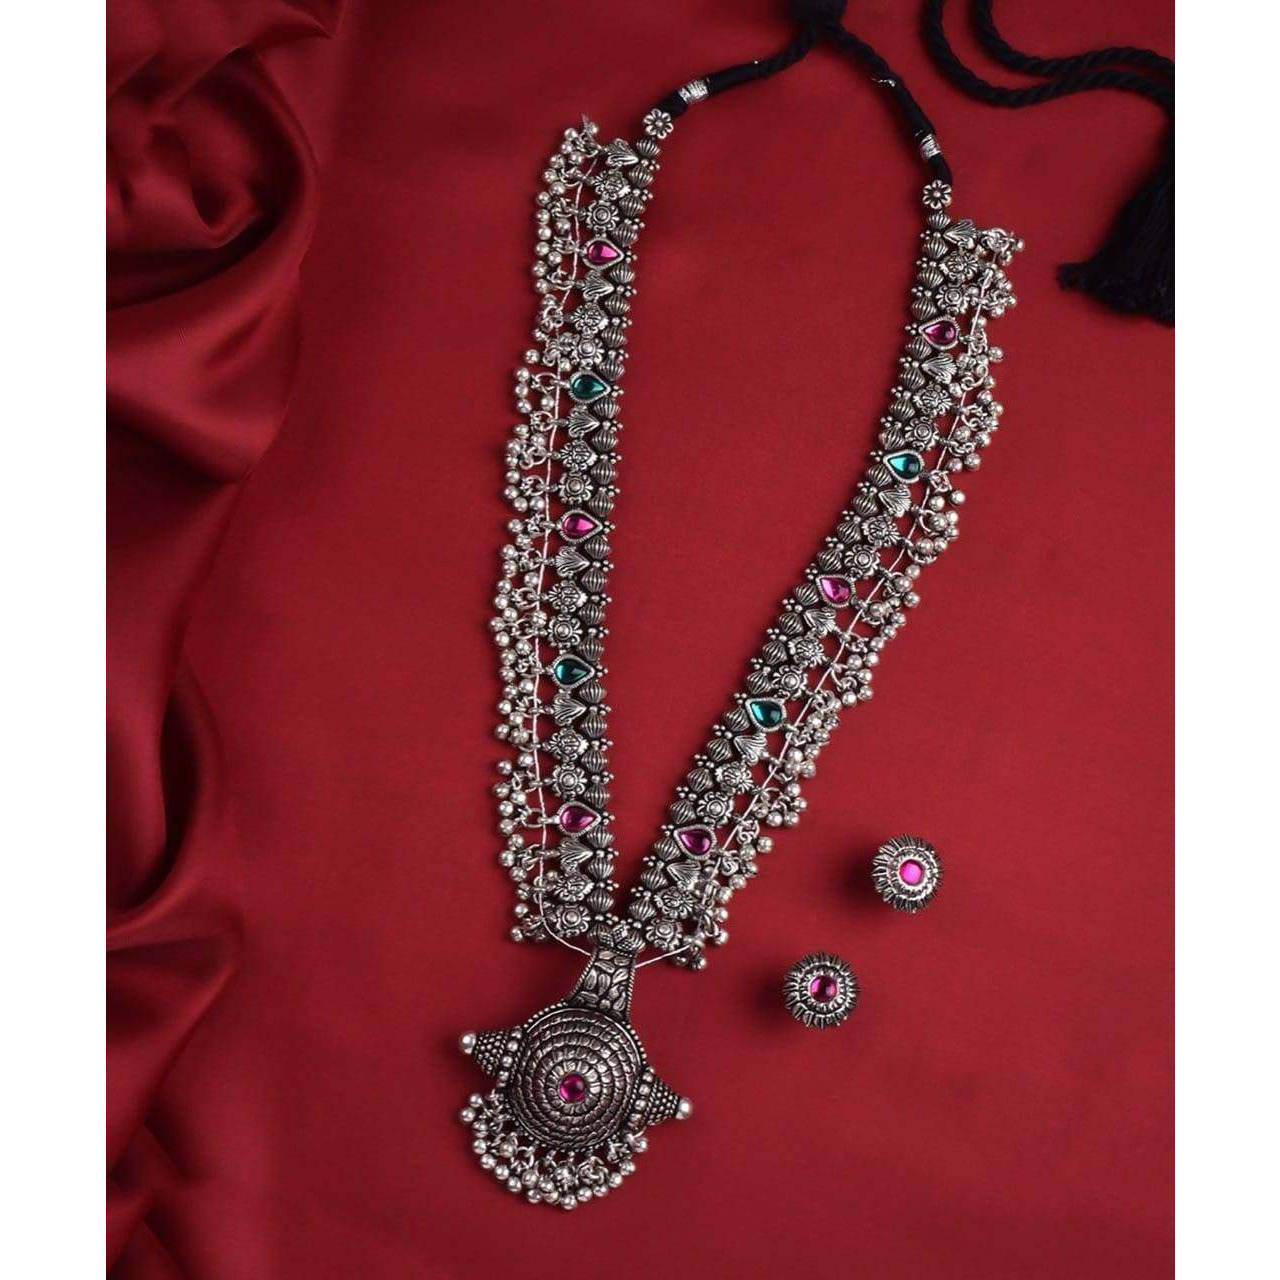 Kolhapuri saaj oxidised wedding bridal jewellery, Indian maharashtrian jewelry, German silver jewellery set, long pendant set, gifts for her